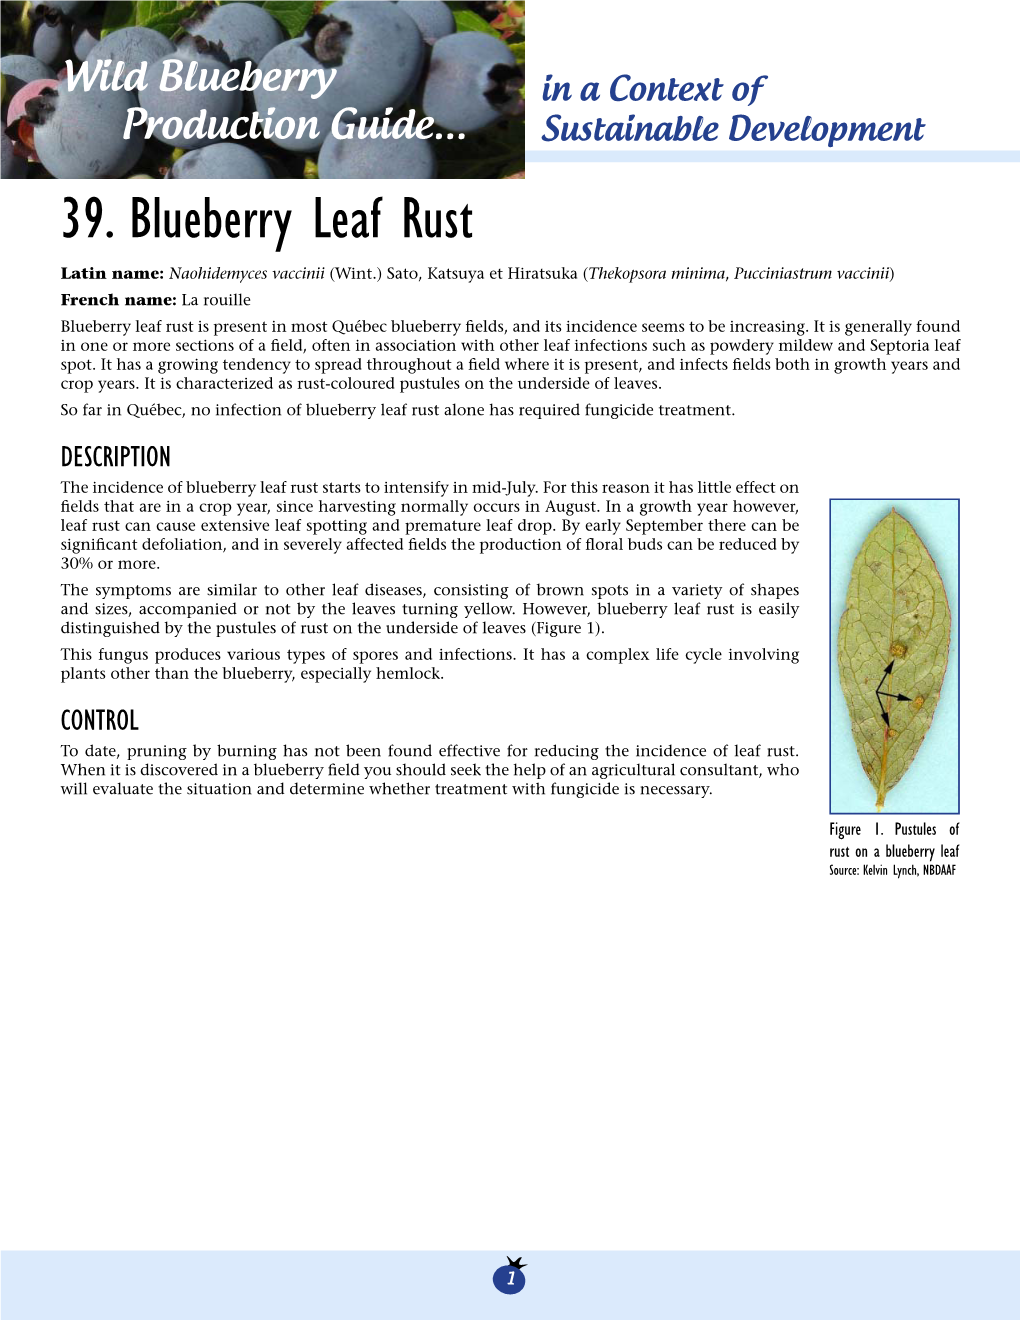 39. Blueberry Leaf Rust